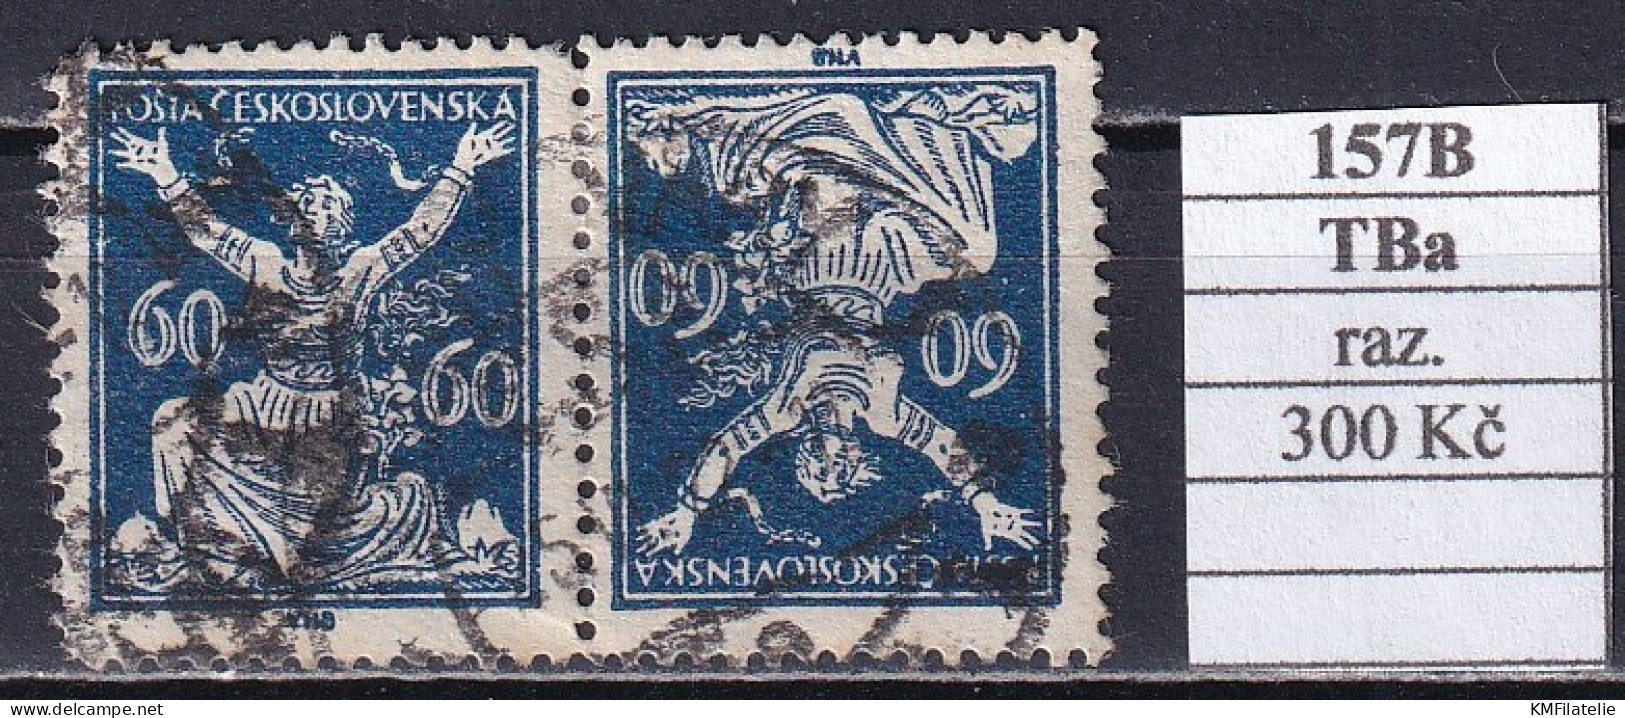 Czechoslovakia Pofis 157B TBa Used - Used Stamps